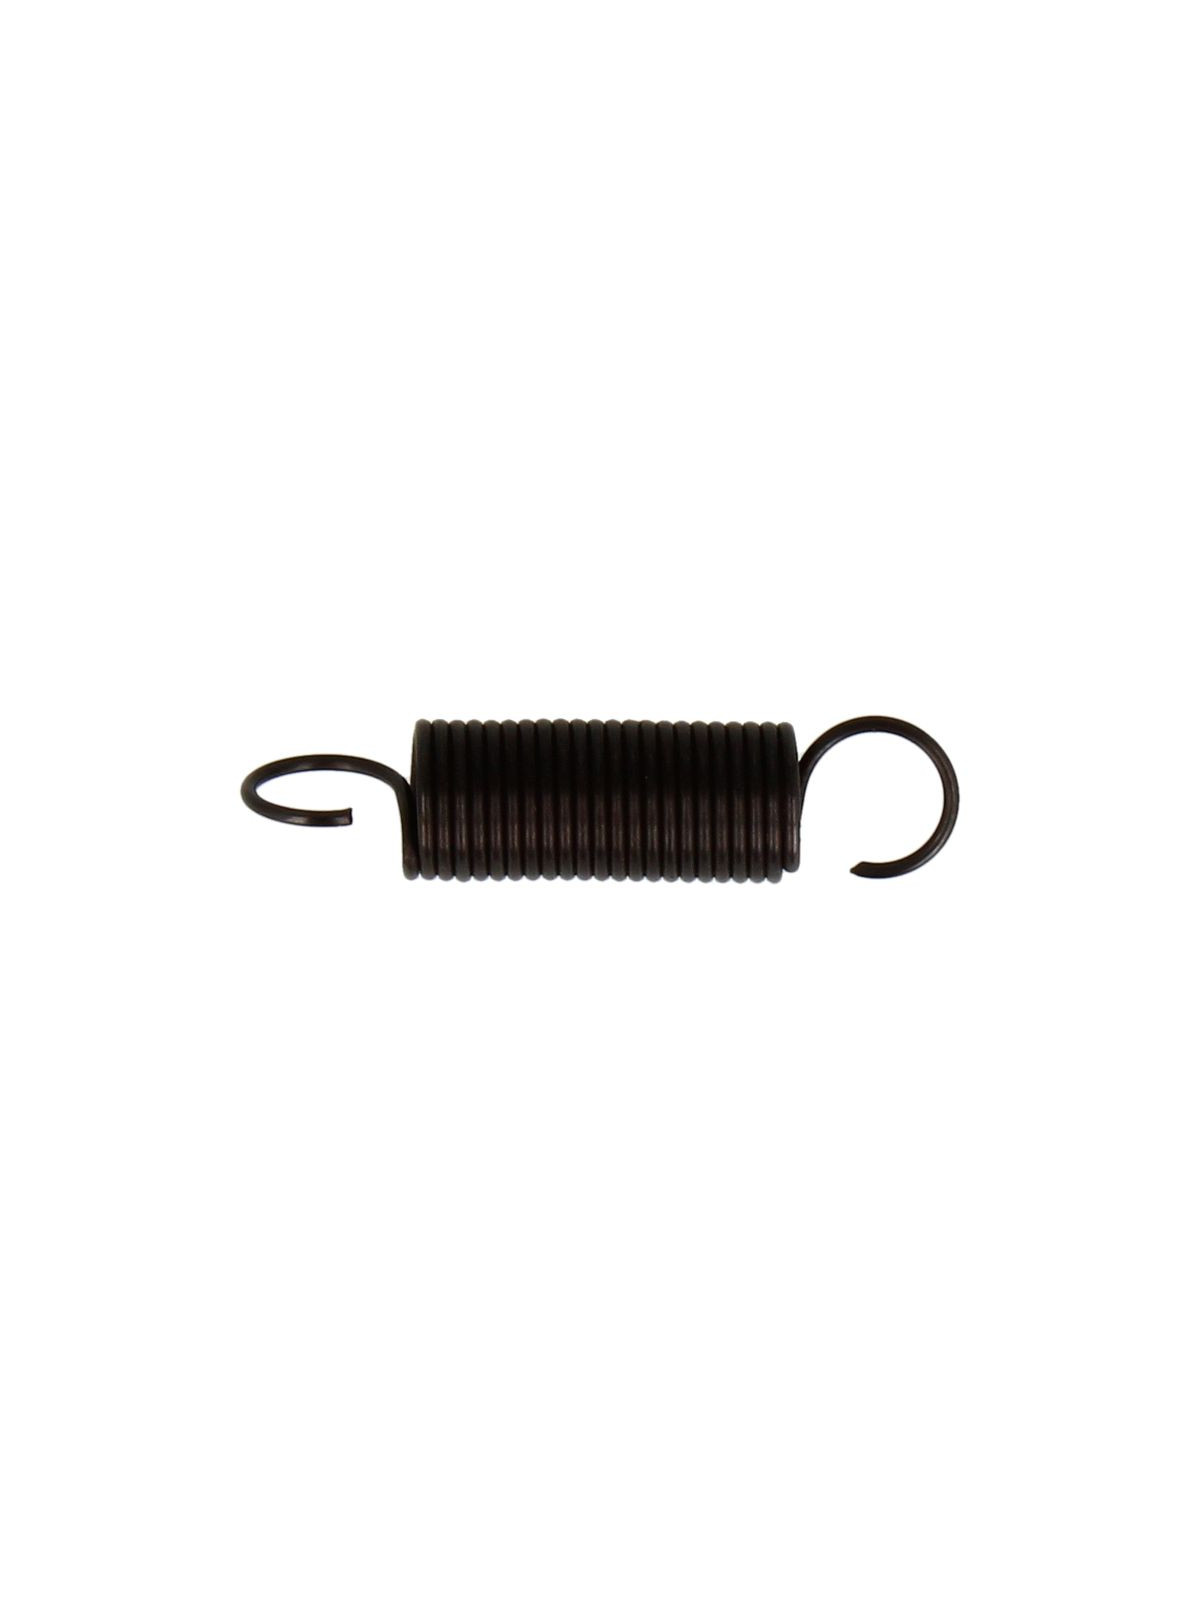 Ressort crochet de porte Sharp R722STWE / R843 - Micro-ondes